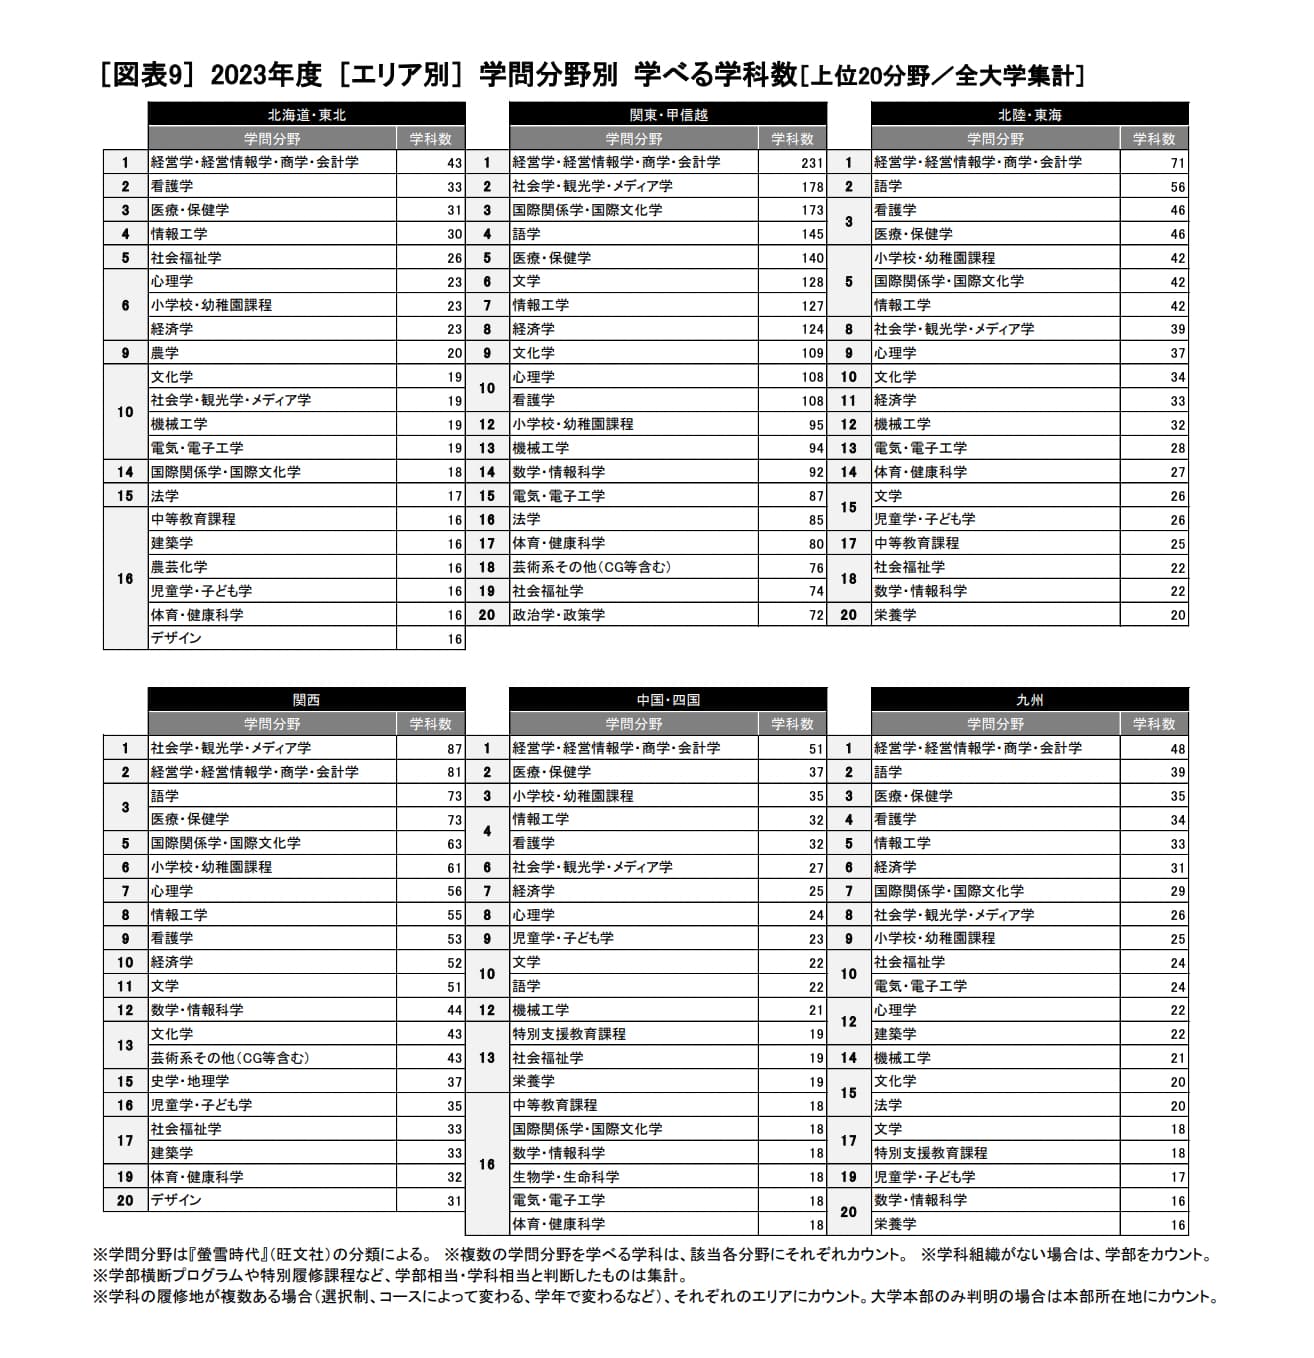 number-of-departments-in-japan